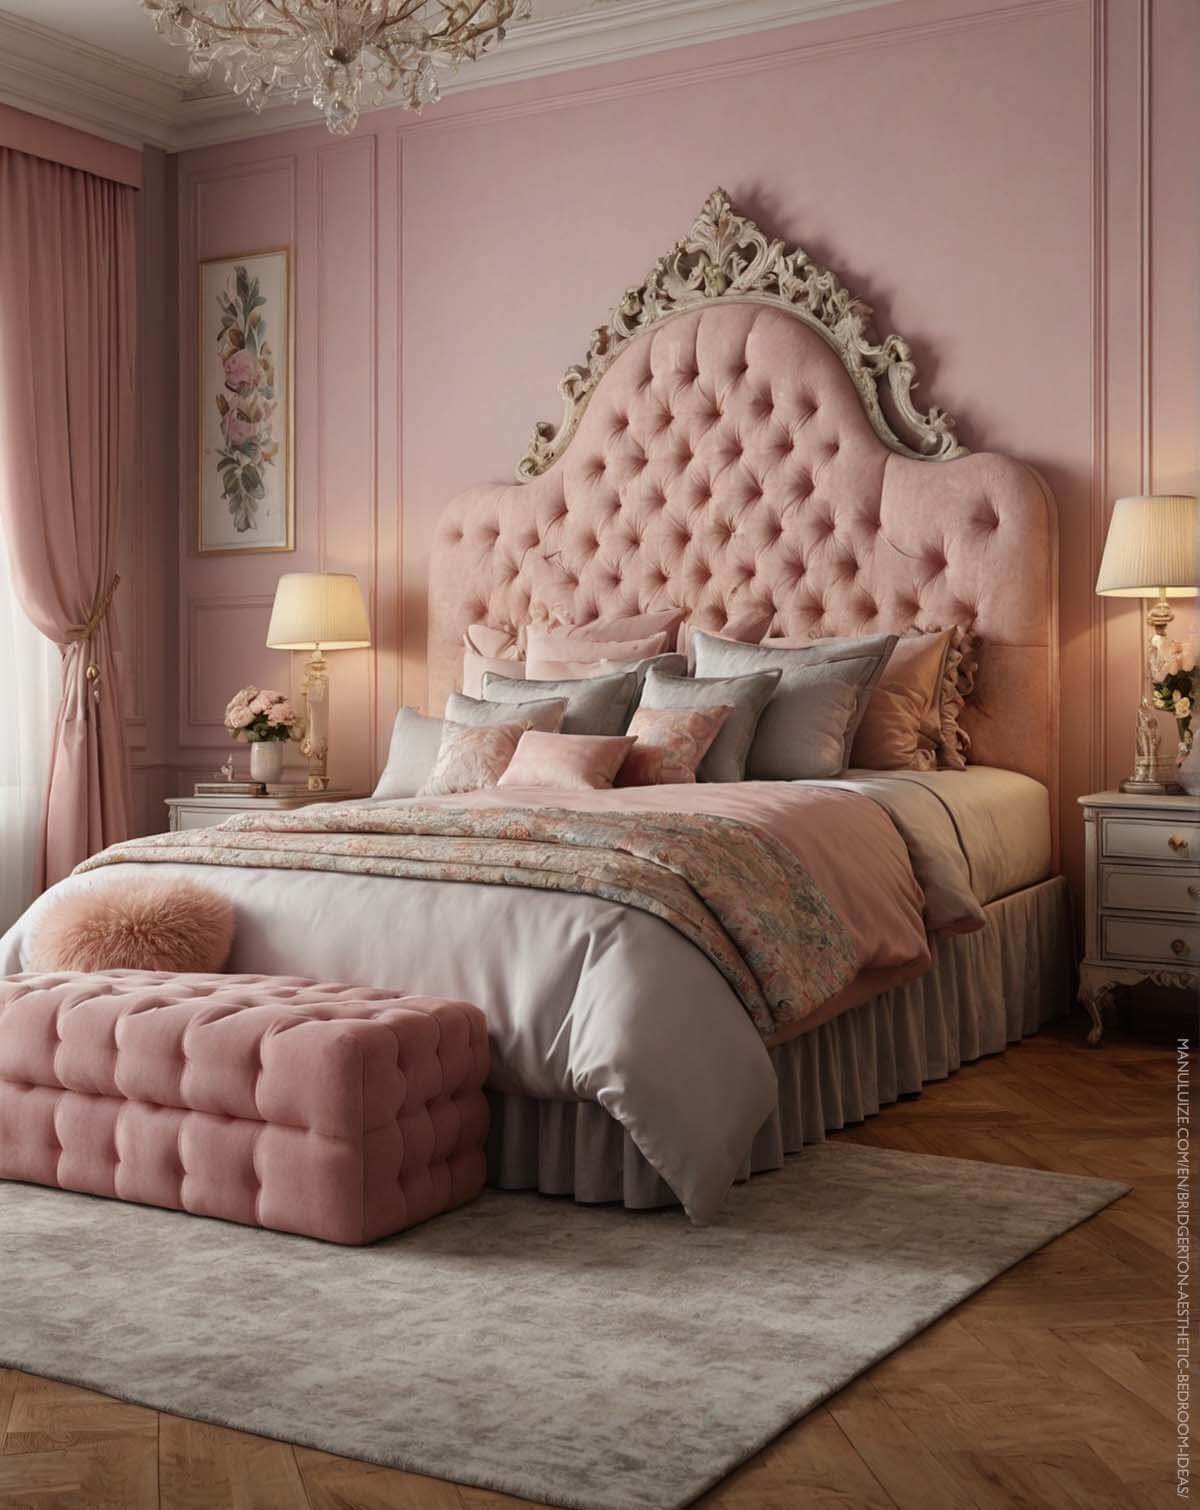 Bridgerton aesthetic bedroom ideas